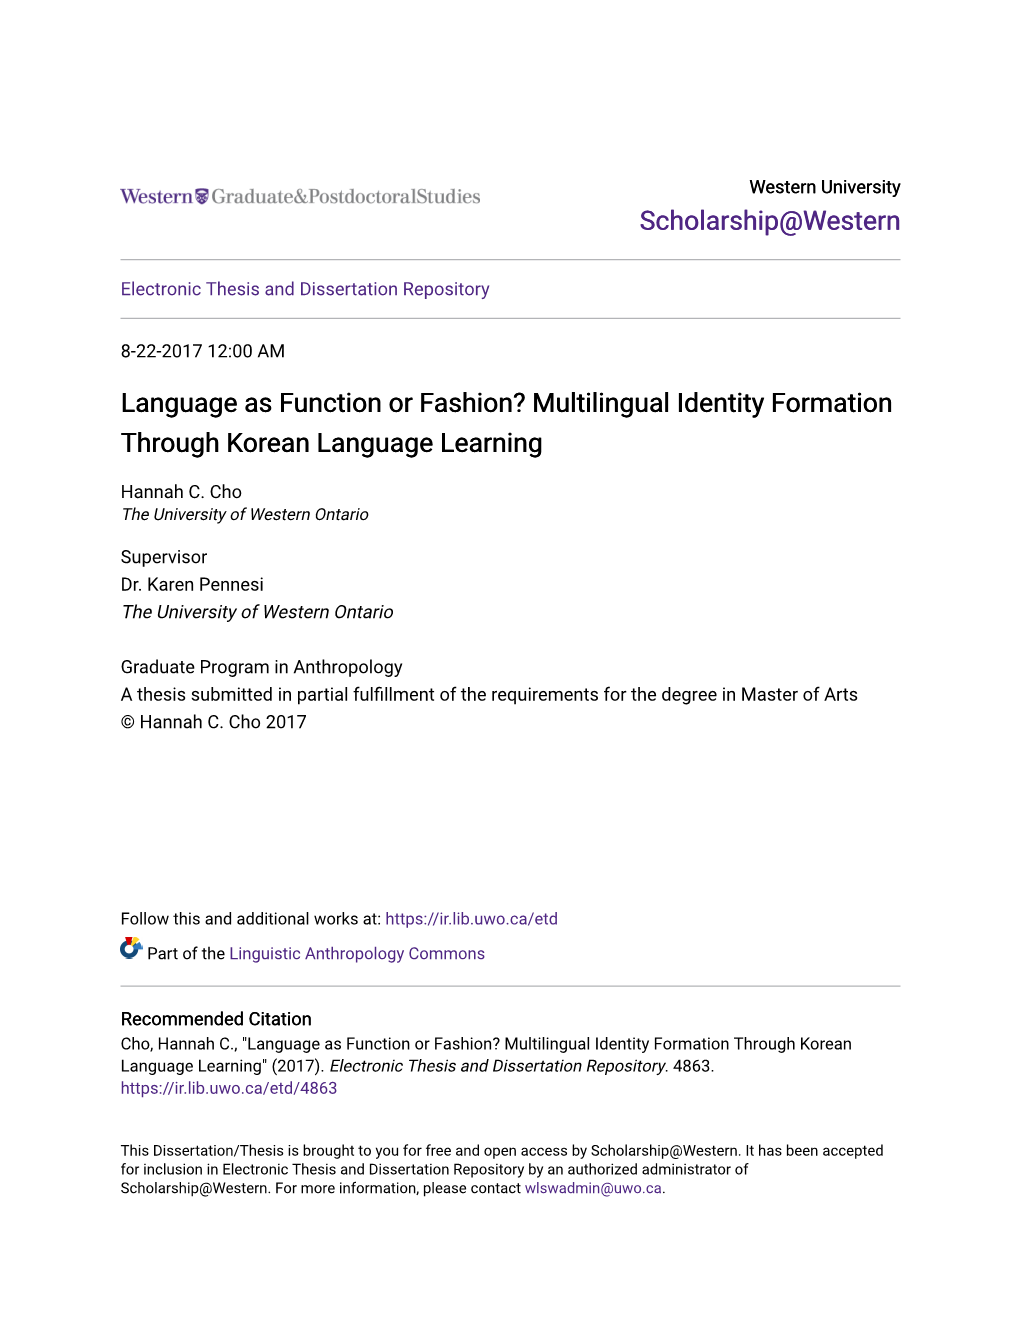 Multilingual Identity Formation Through Korean Language Learning